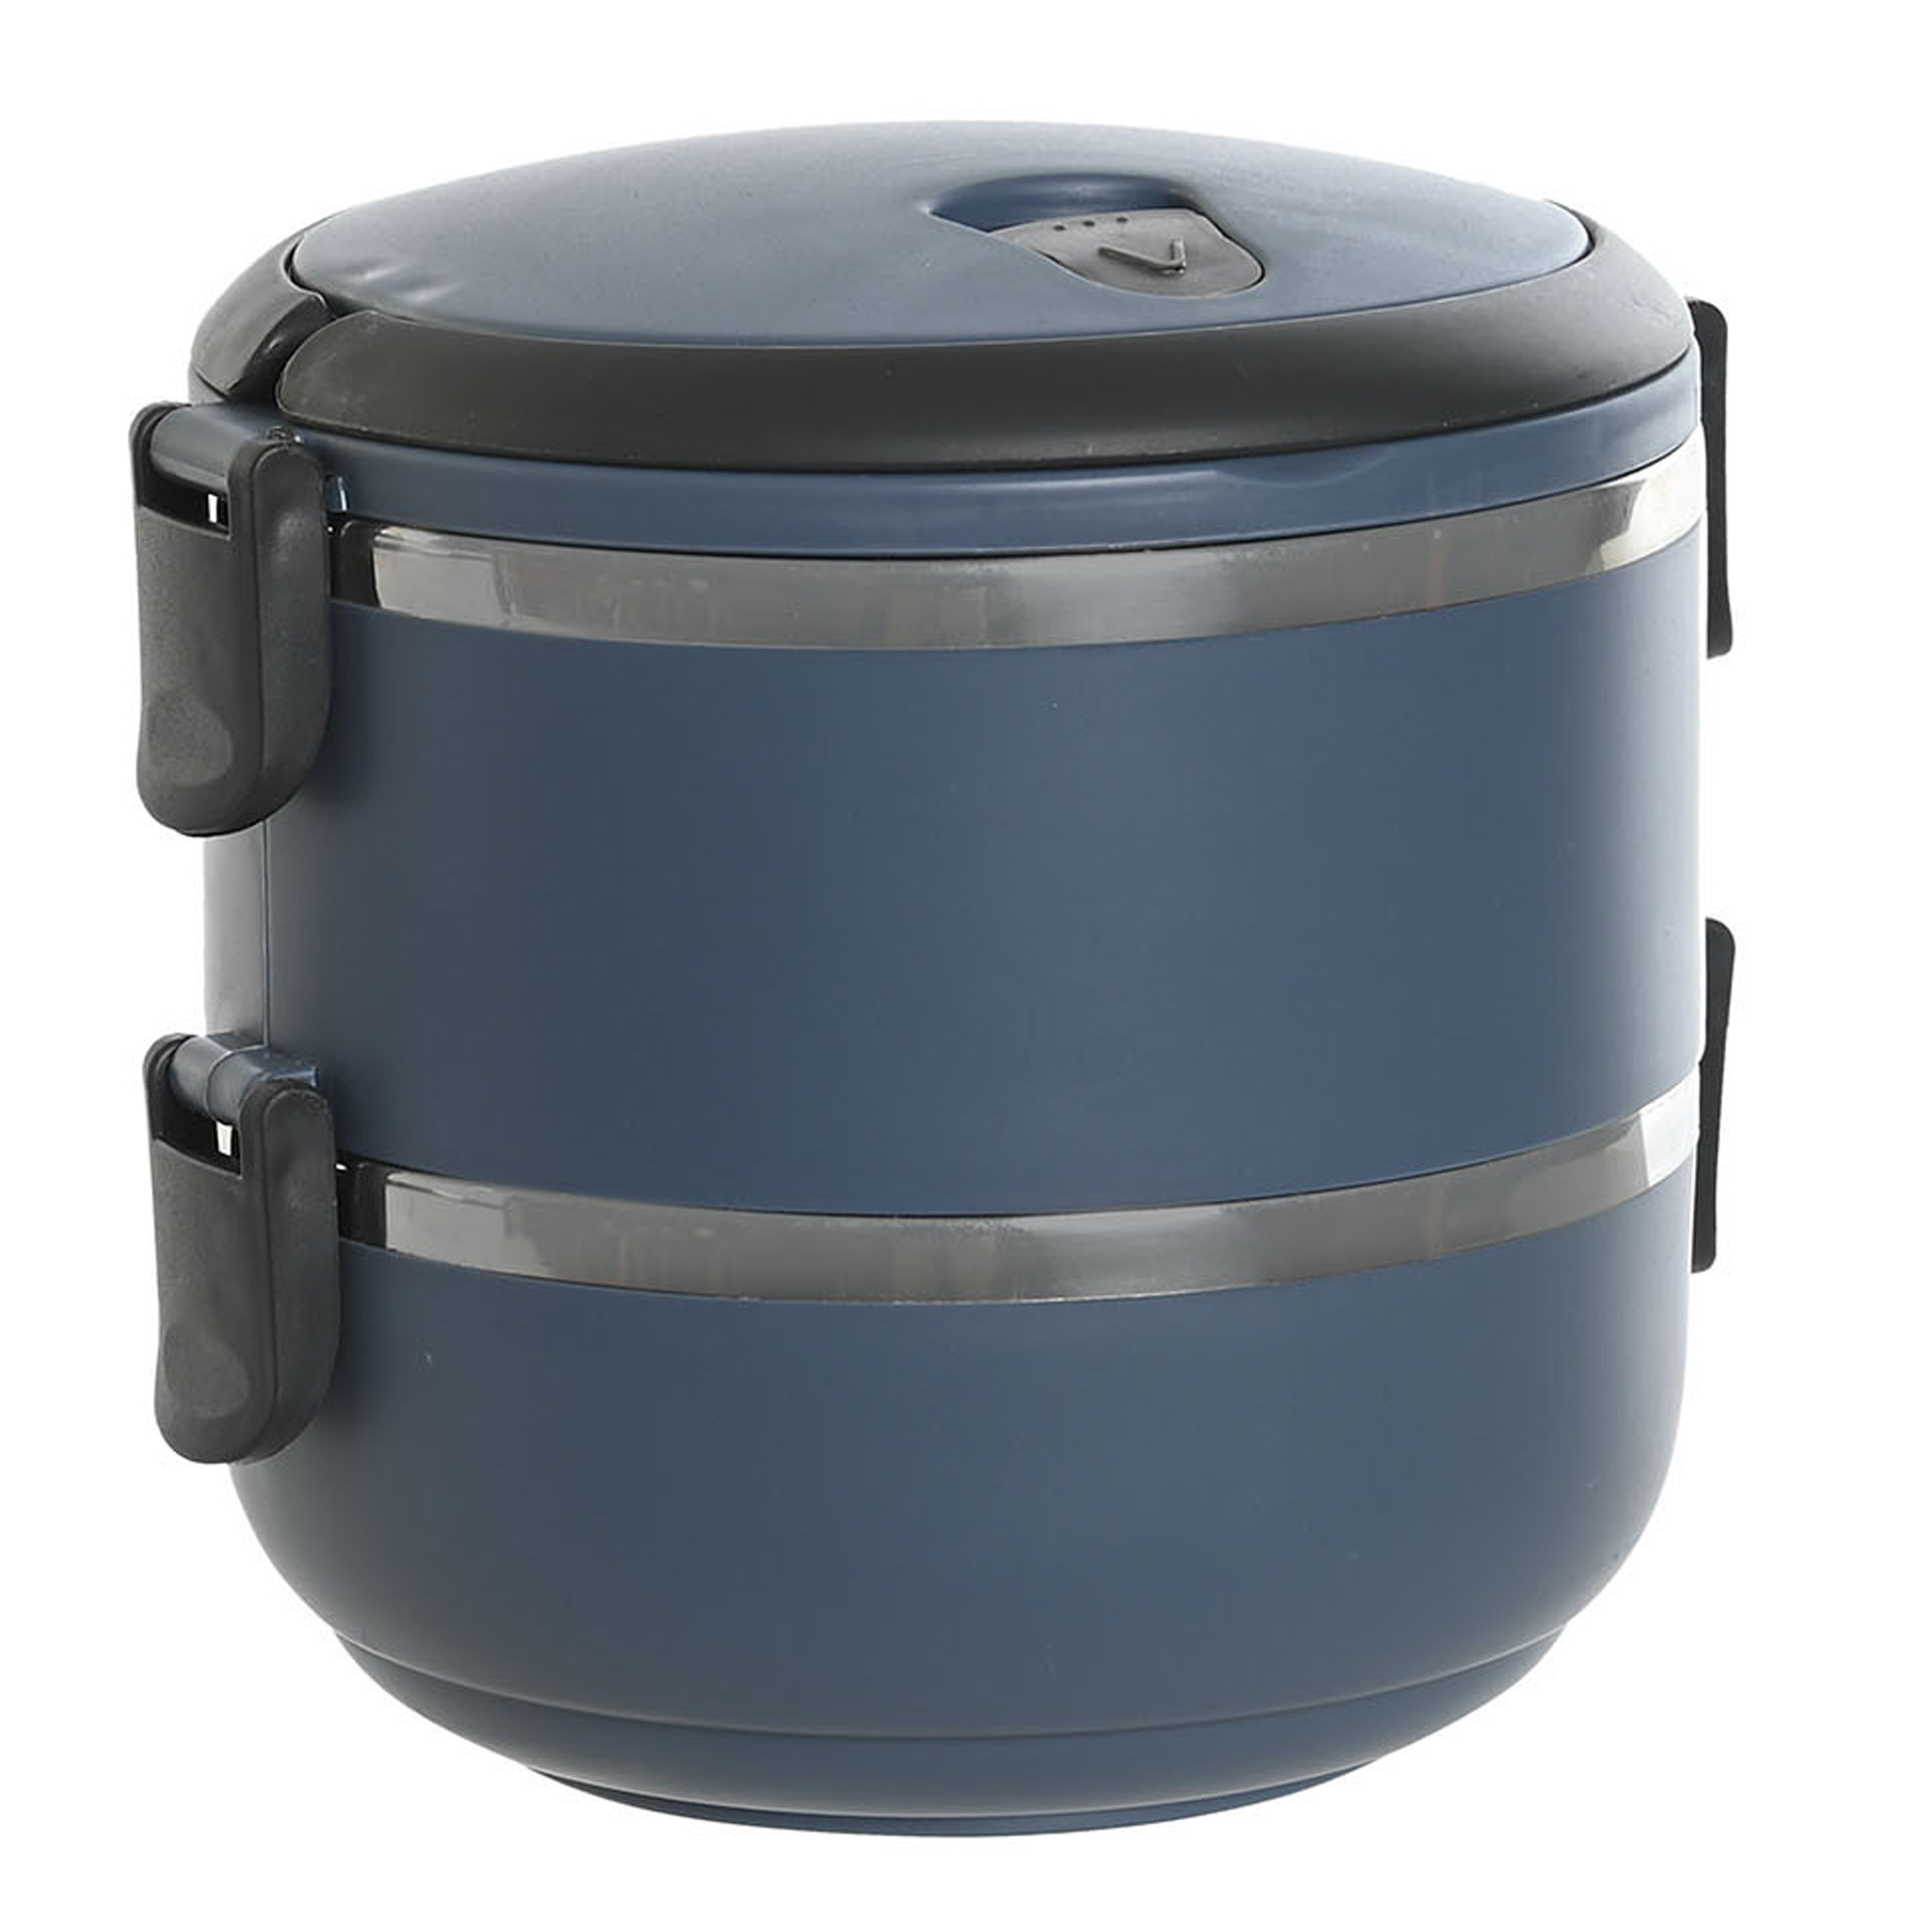 Items Stapelbare thermische lunchbox-warme maaltijd box blauw 16 x 15 cm